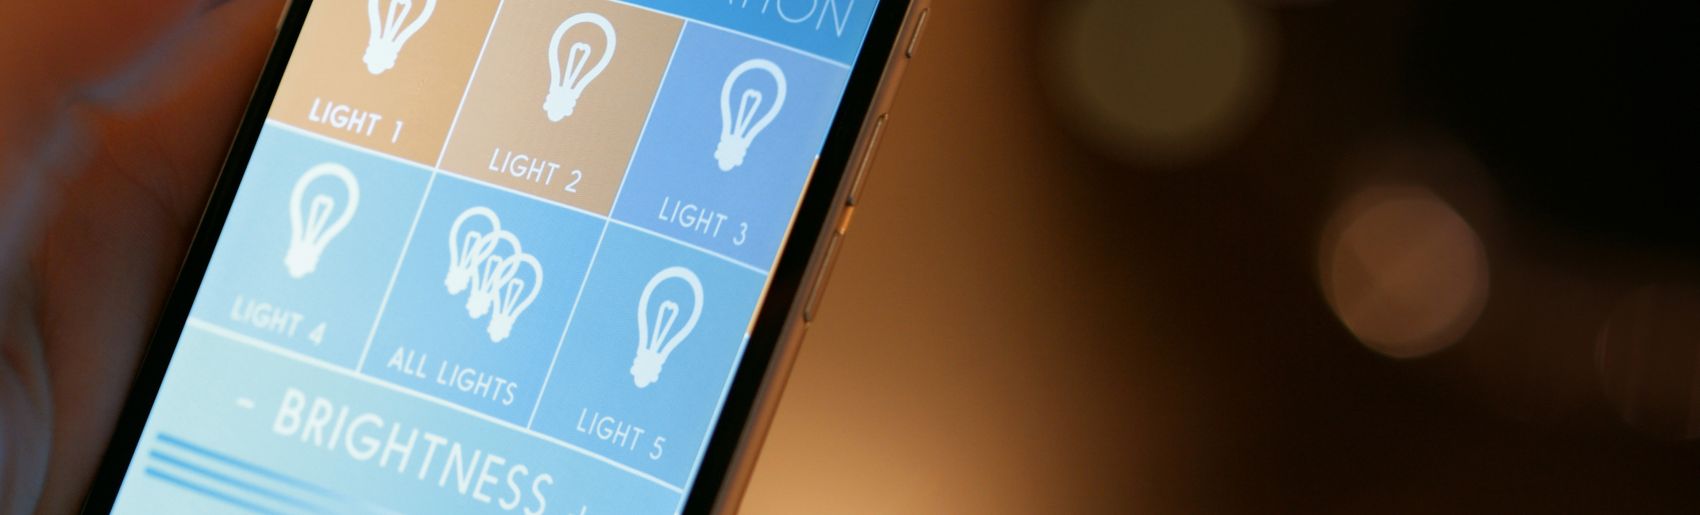 smart-lighting-service.jpg